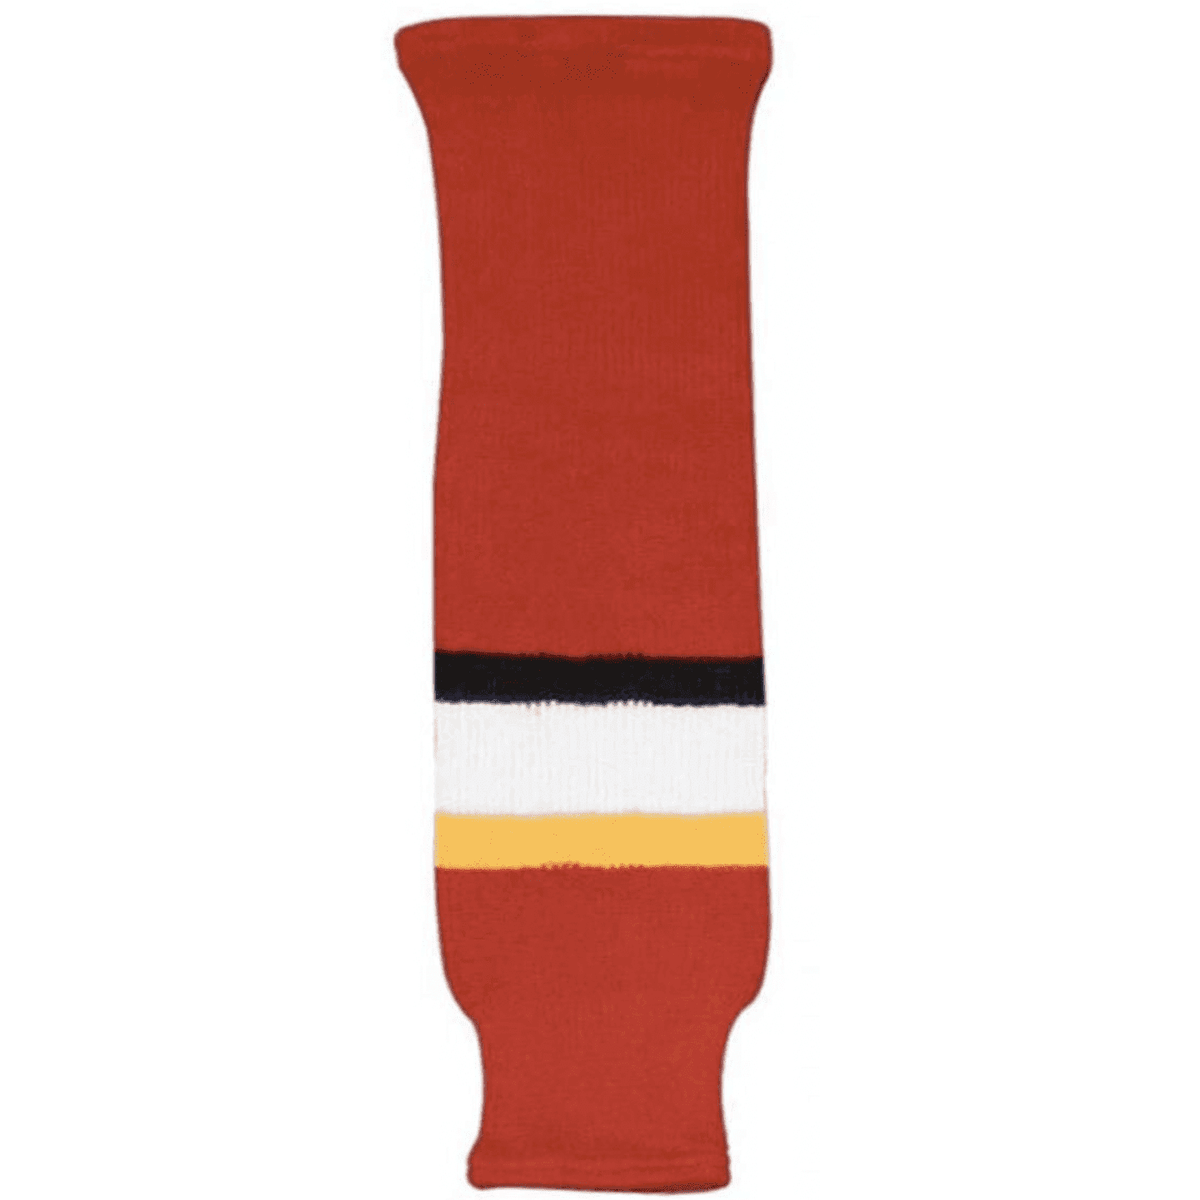 Calgary Flames Knitted Hockey Socks - Senior